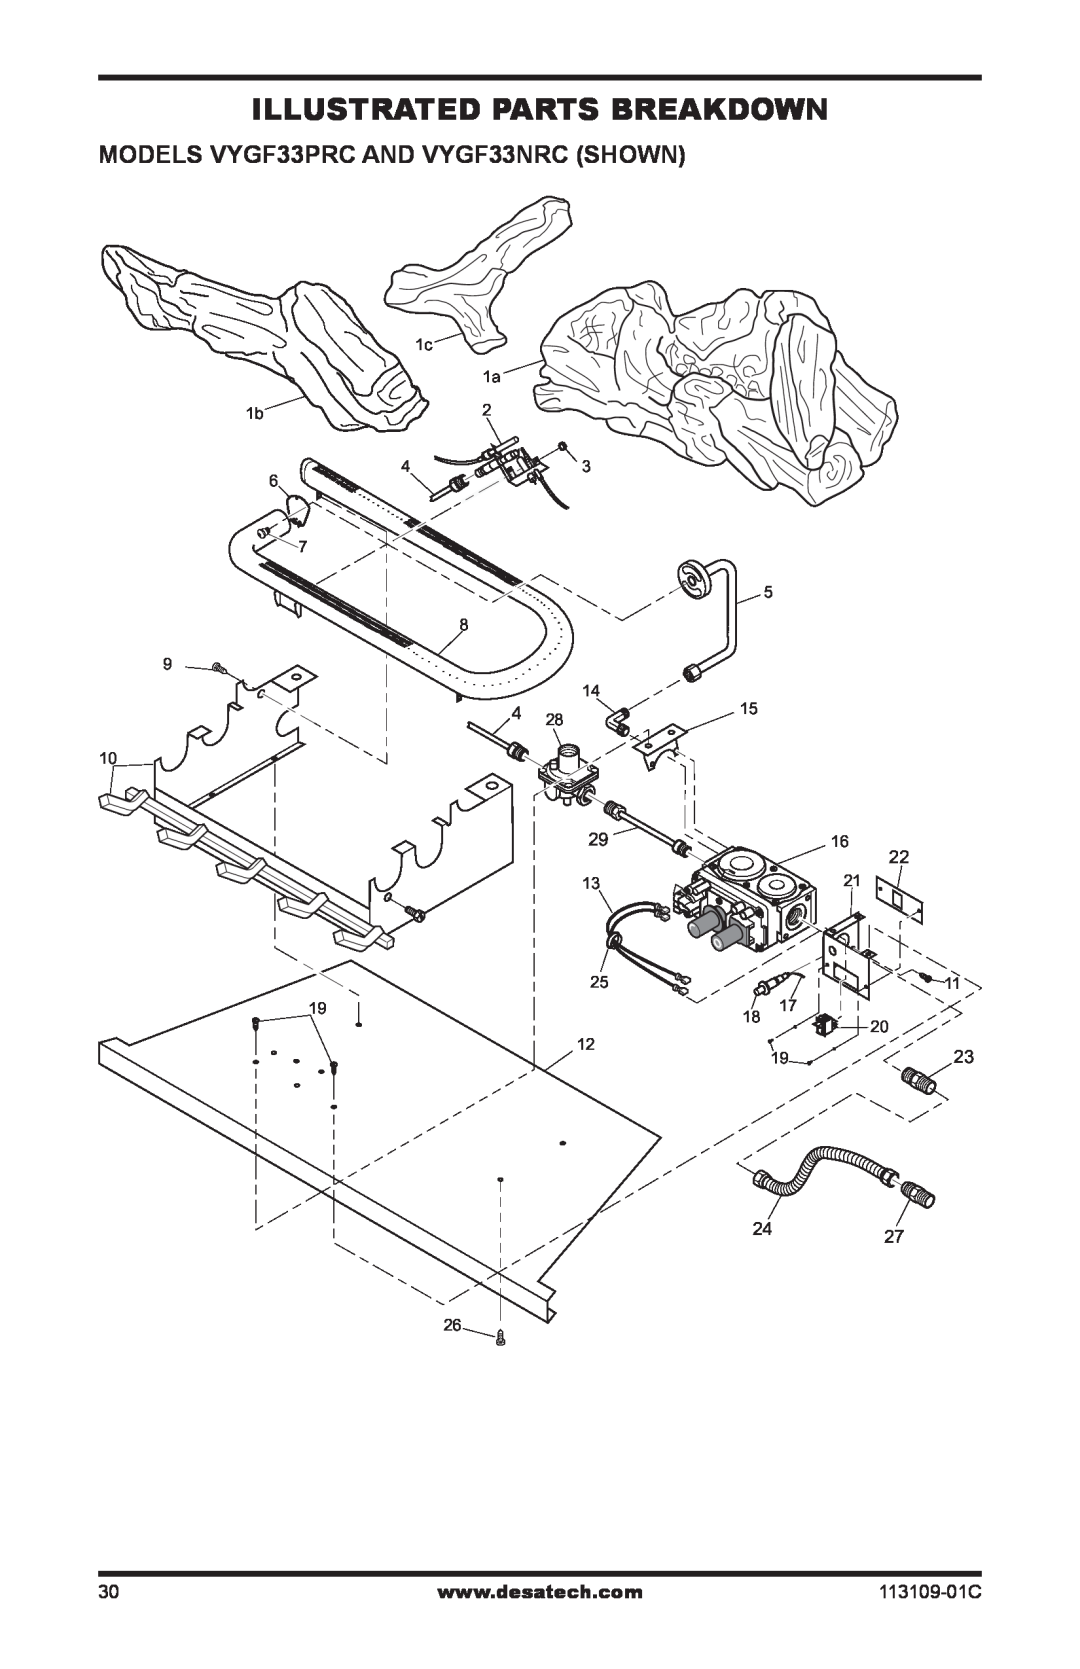 Desa FPVF33PRA installation manual Illustrated Parts Breakdown, Models VYGF33PRC and VYGF33NRC Shown, 2427, 113109-01C 